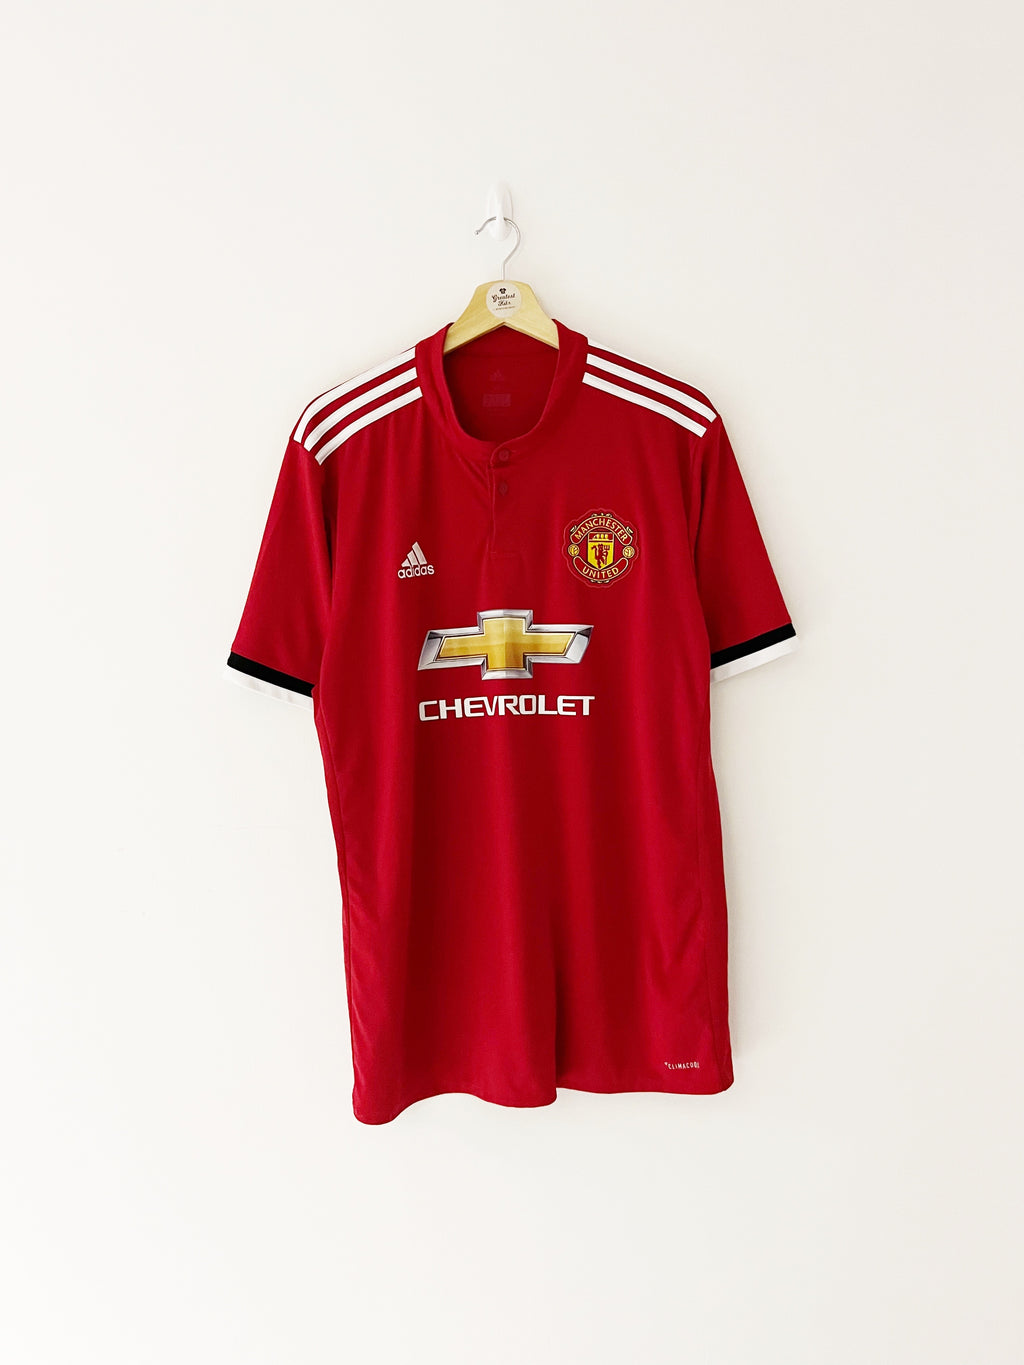 2017/18 Manchester United Home Shirt (XL) 9/10